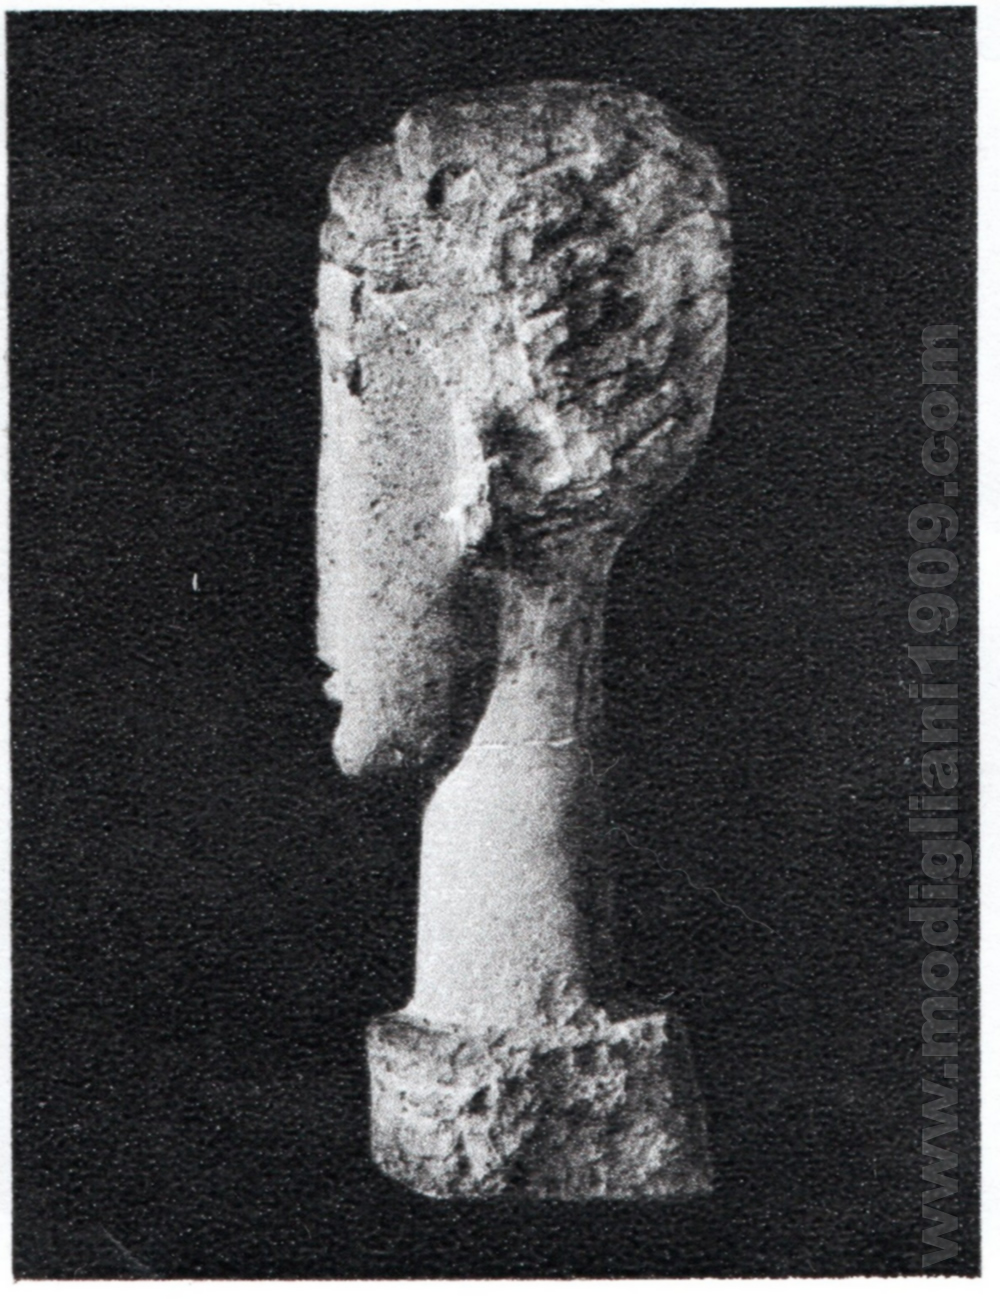 Head (left side), Amedeo Modigliani, 1911- 1912, Limestone, The Barnes Foundation, Merino Station, Philadelphia